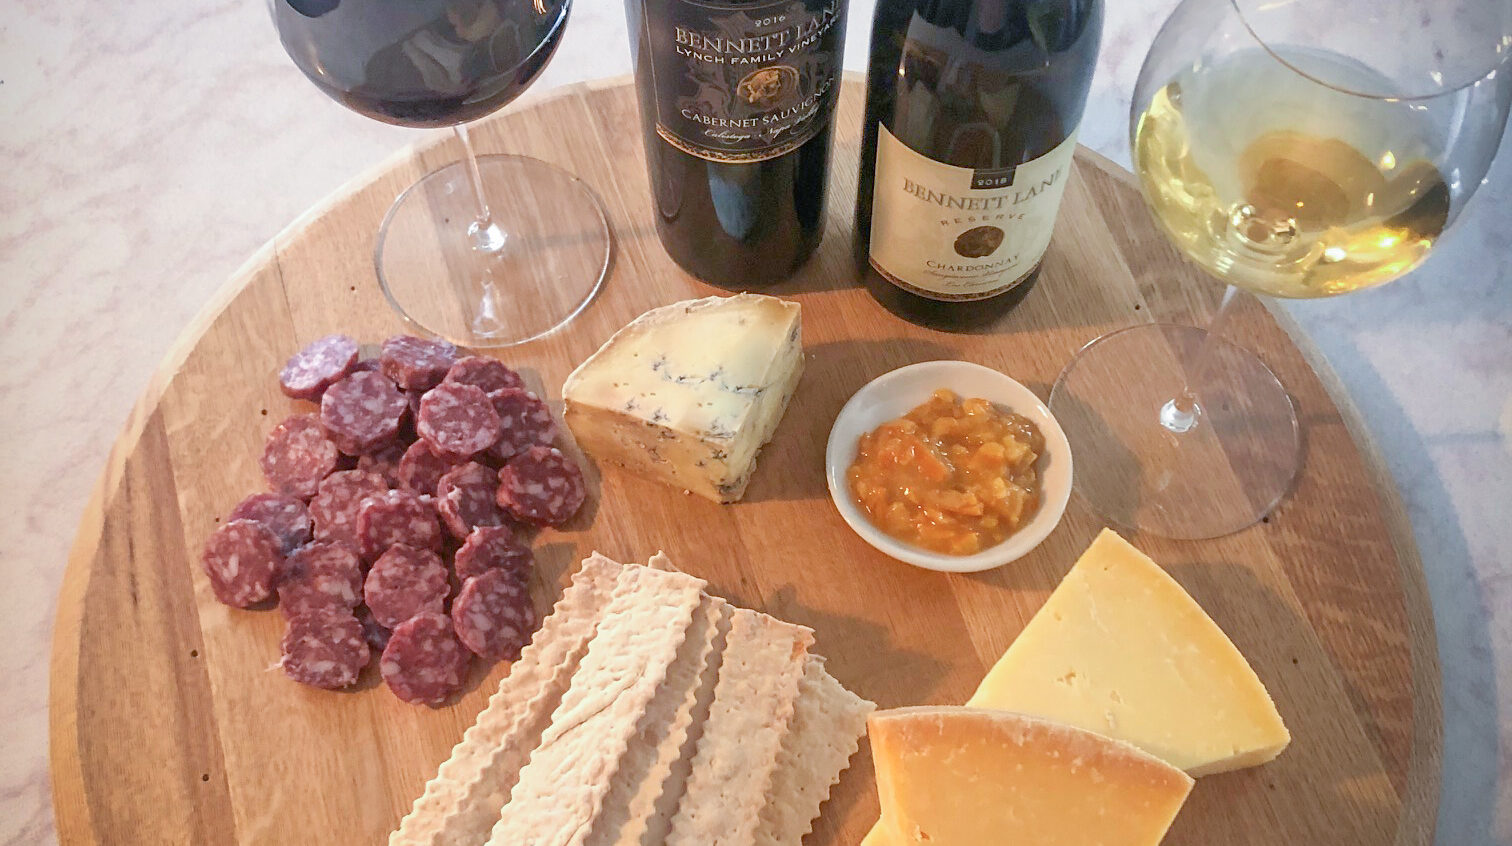 Bennett Valley wine and cheese pairing.